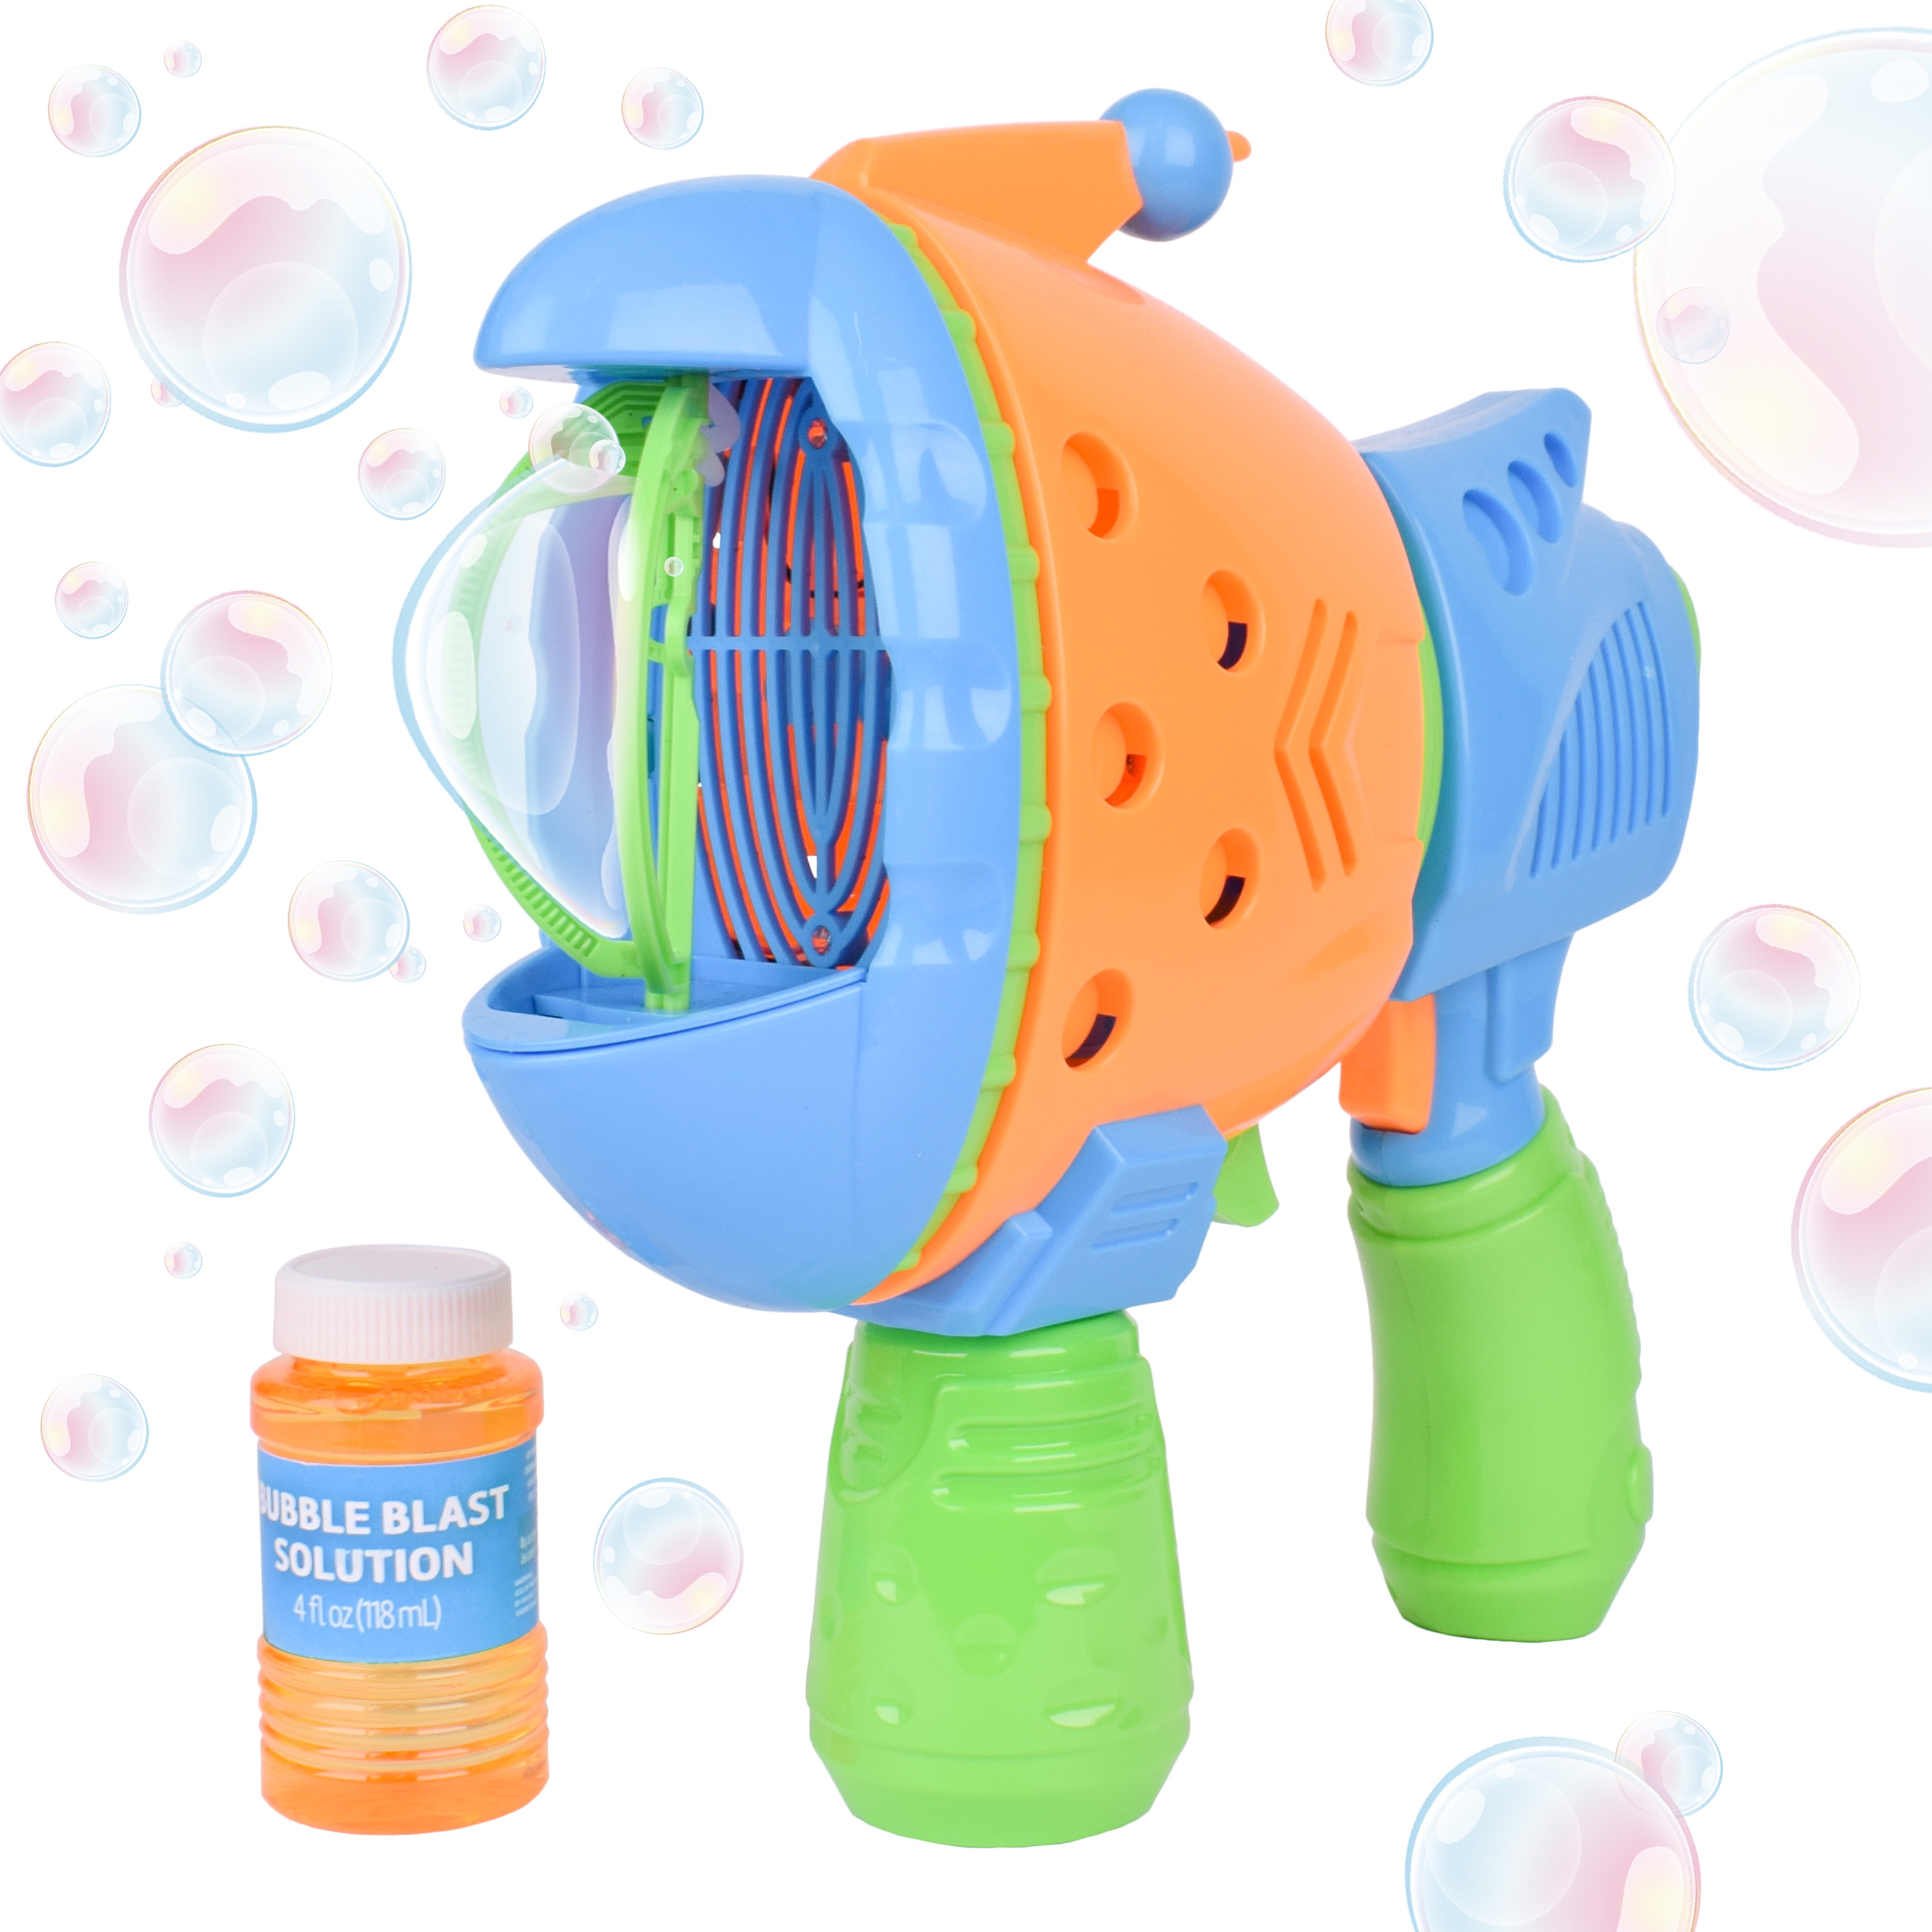 Play Day Bubble Bazooka – Handheld Bubble Gun, Includes Bubble